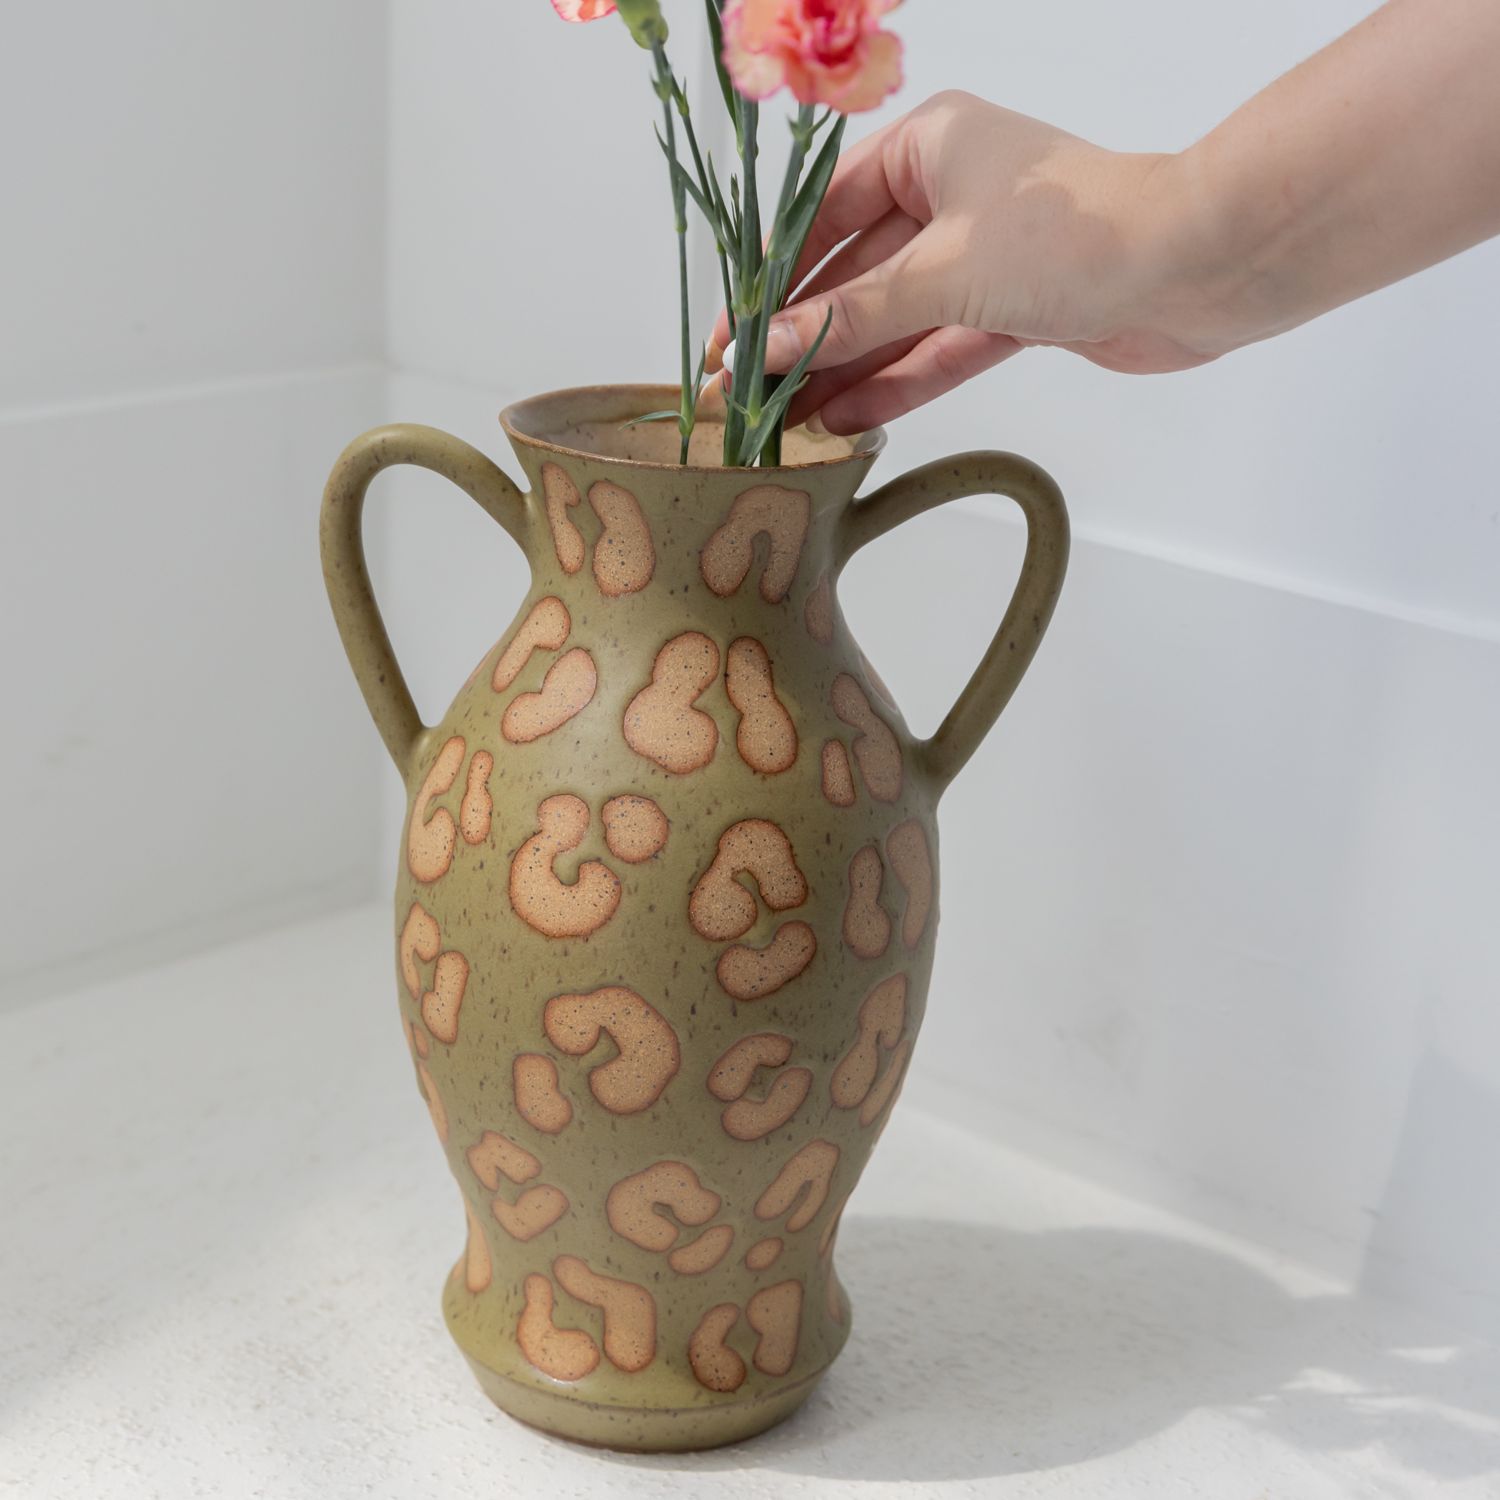 Mima Ceramics: Green Print Vessel no. 3 Product Image 3 of 3